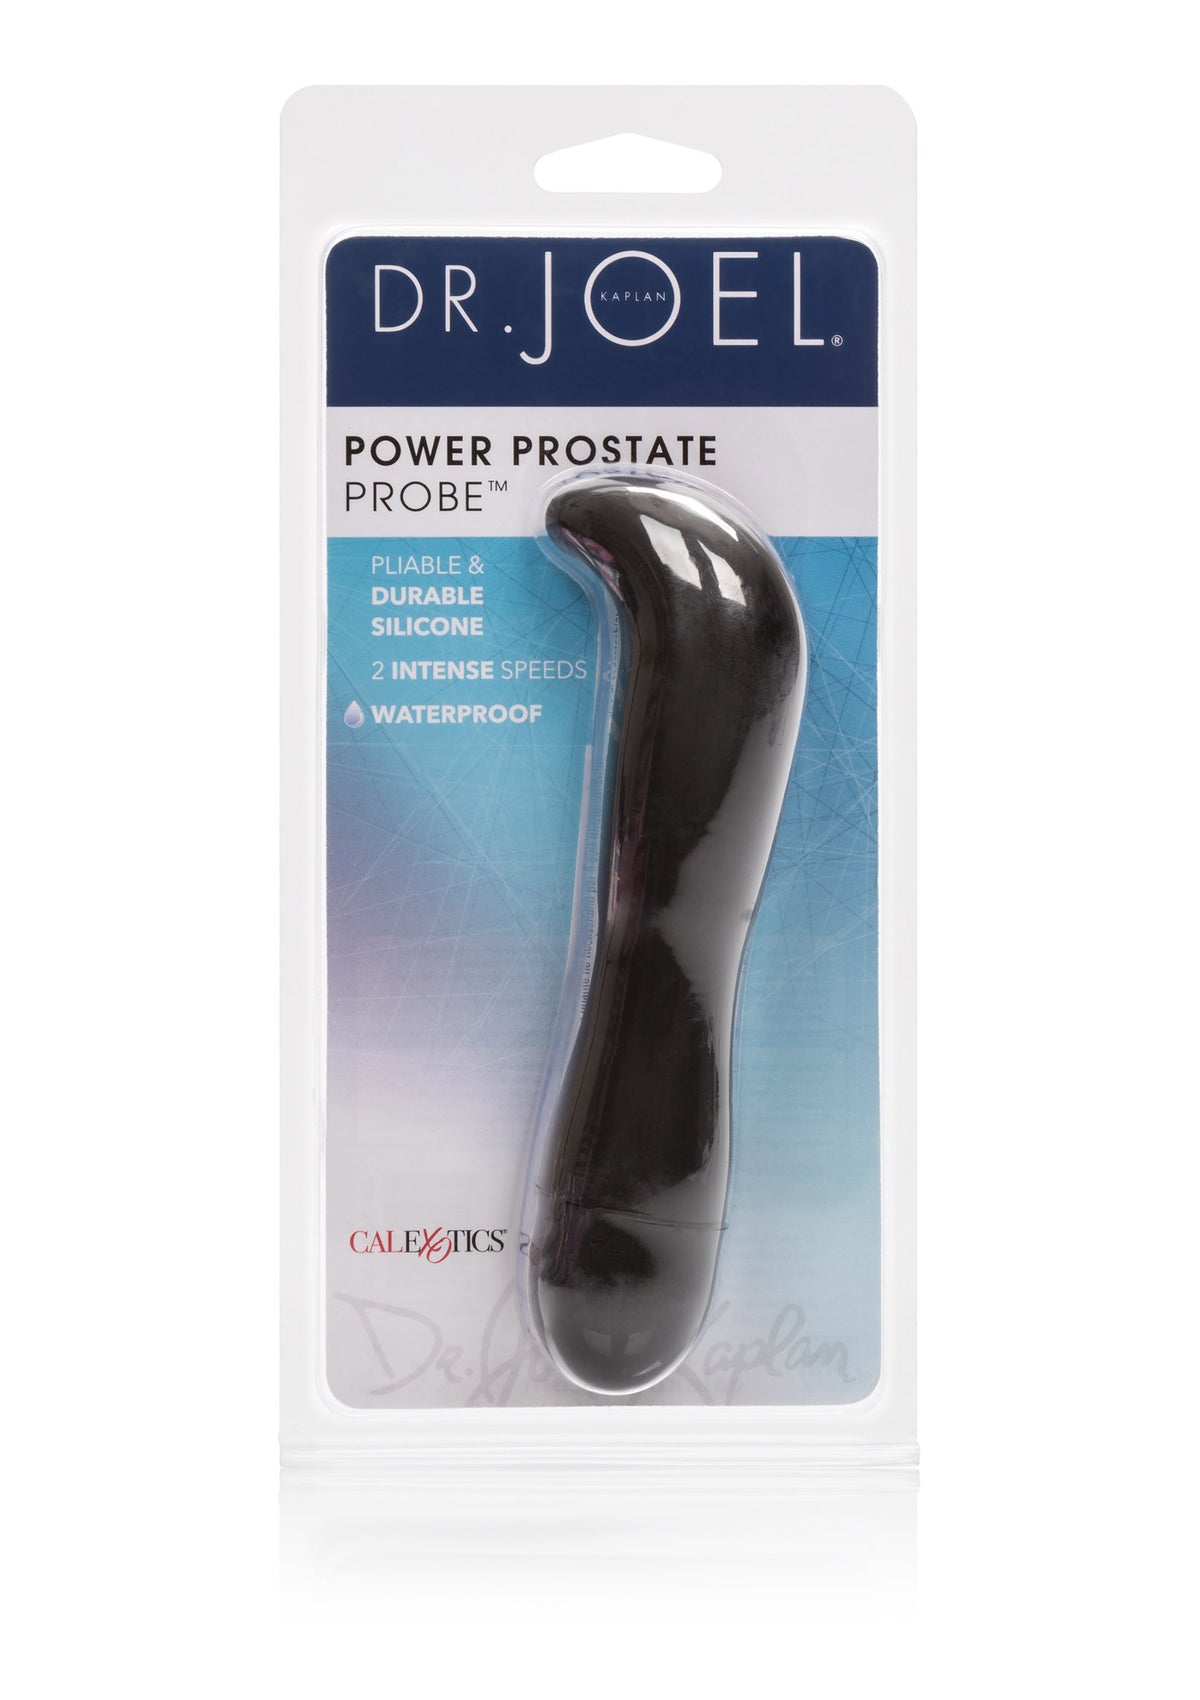 Power Prostate Probe